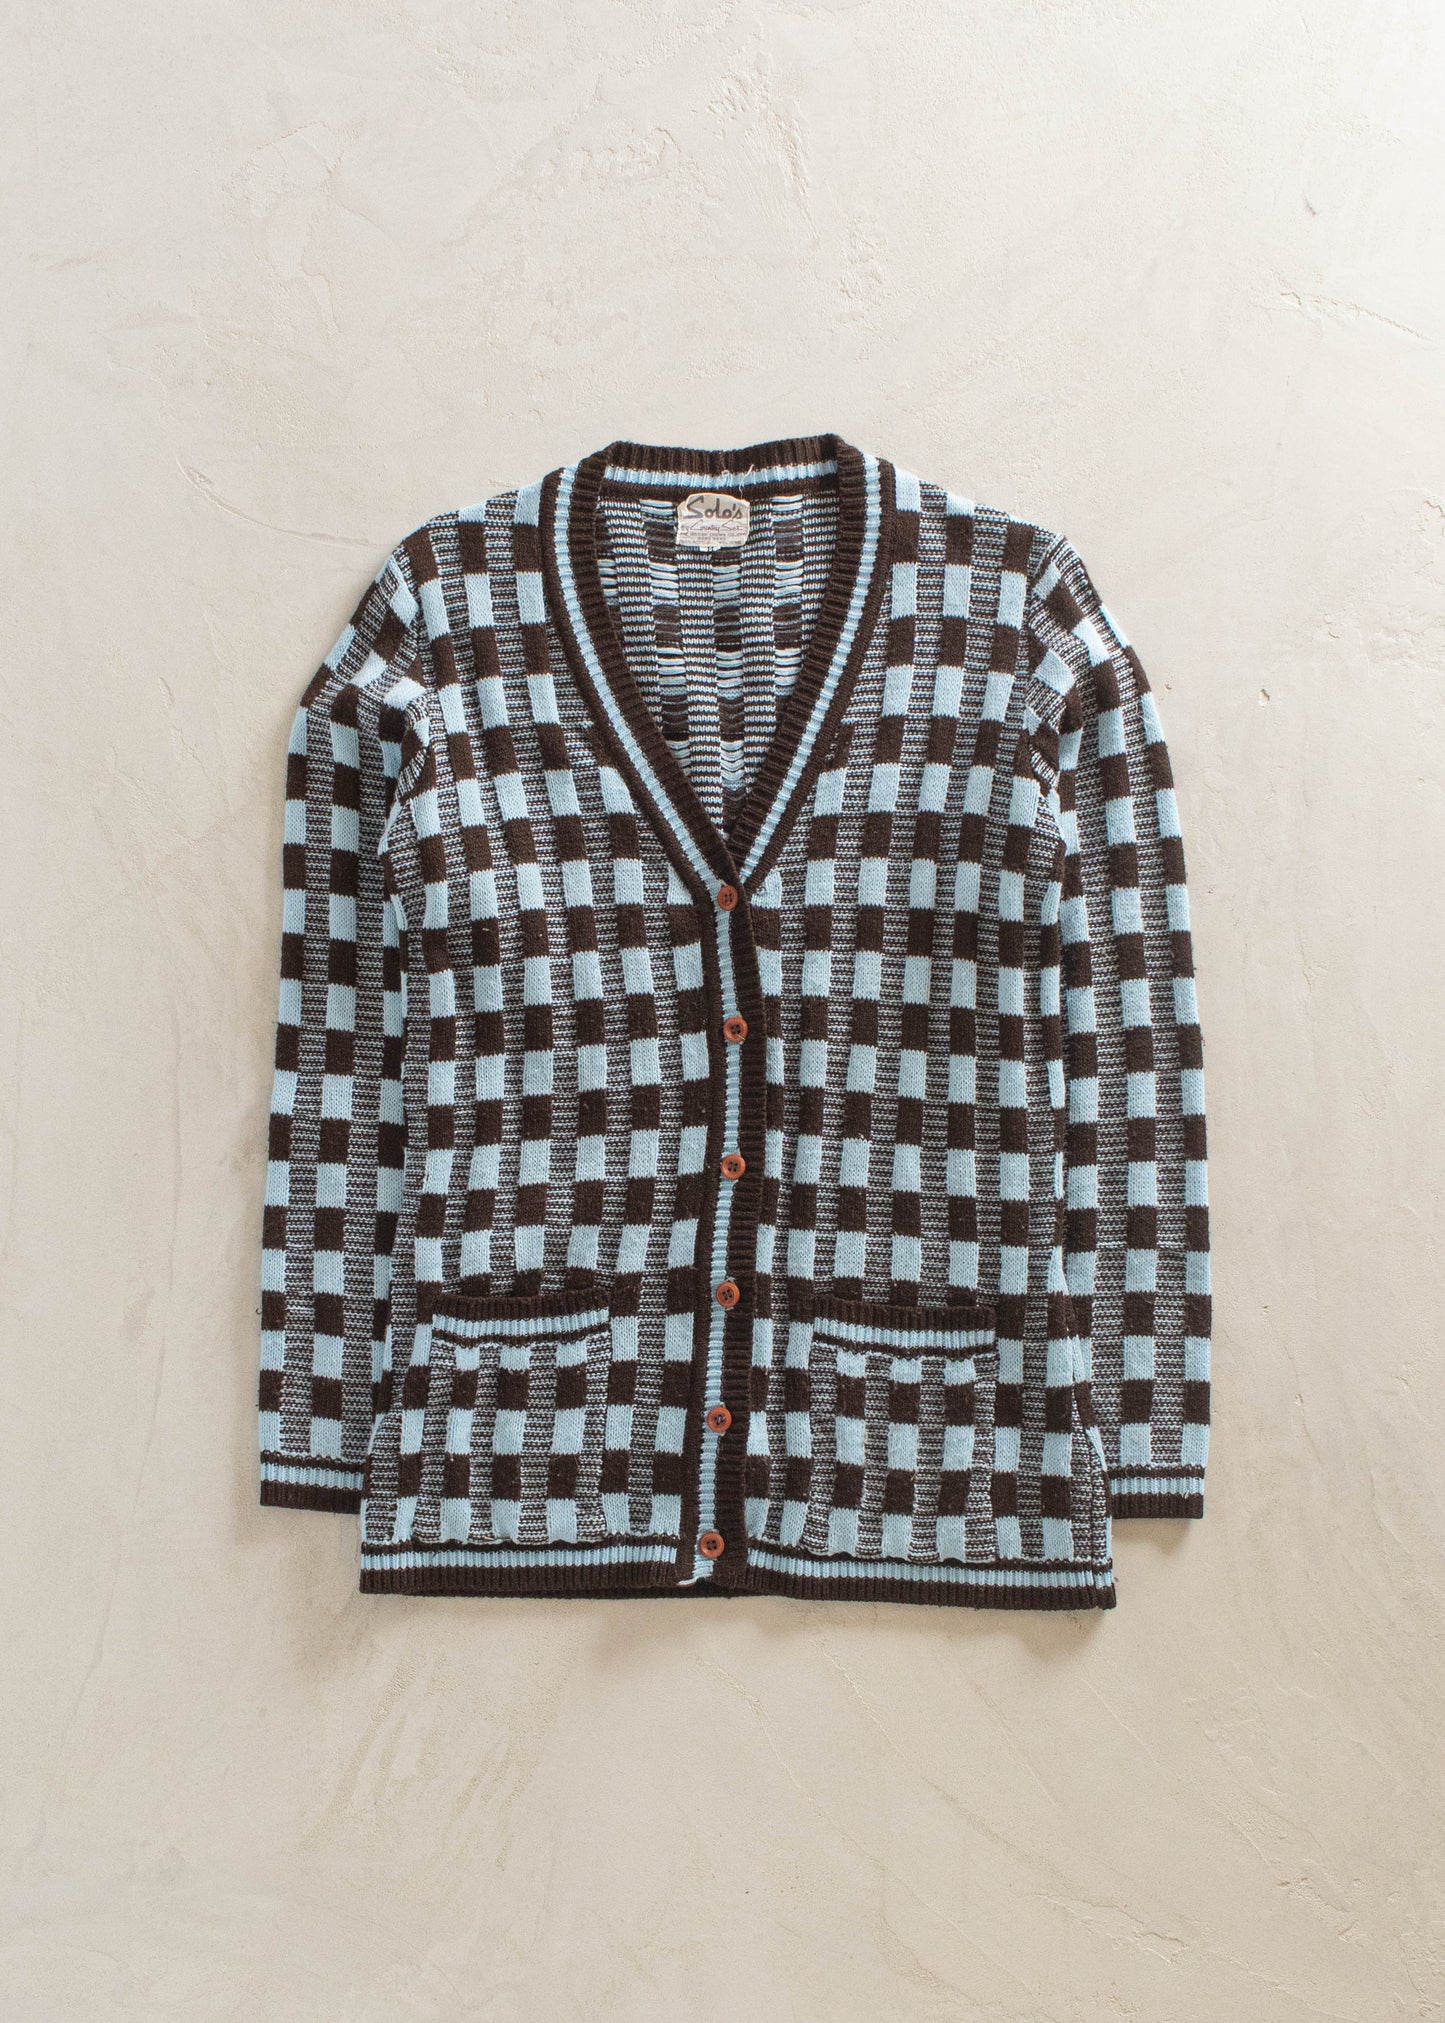 1980s Country Set Plaid Pattern Knit Cardigan Size XS/S